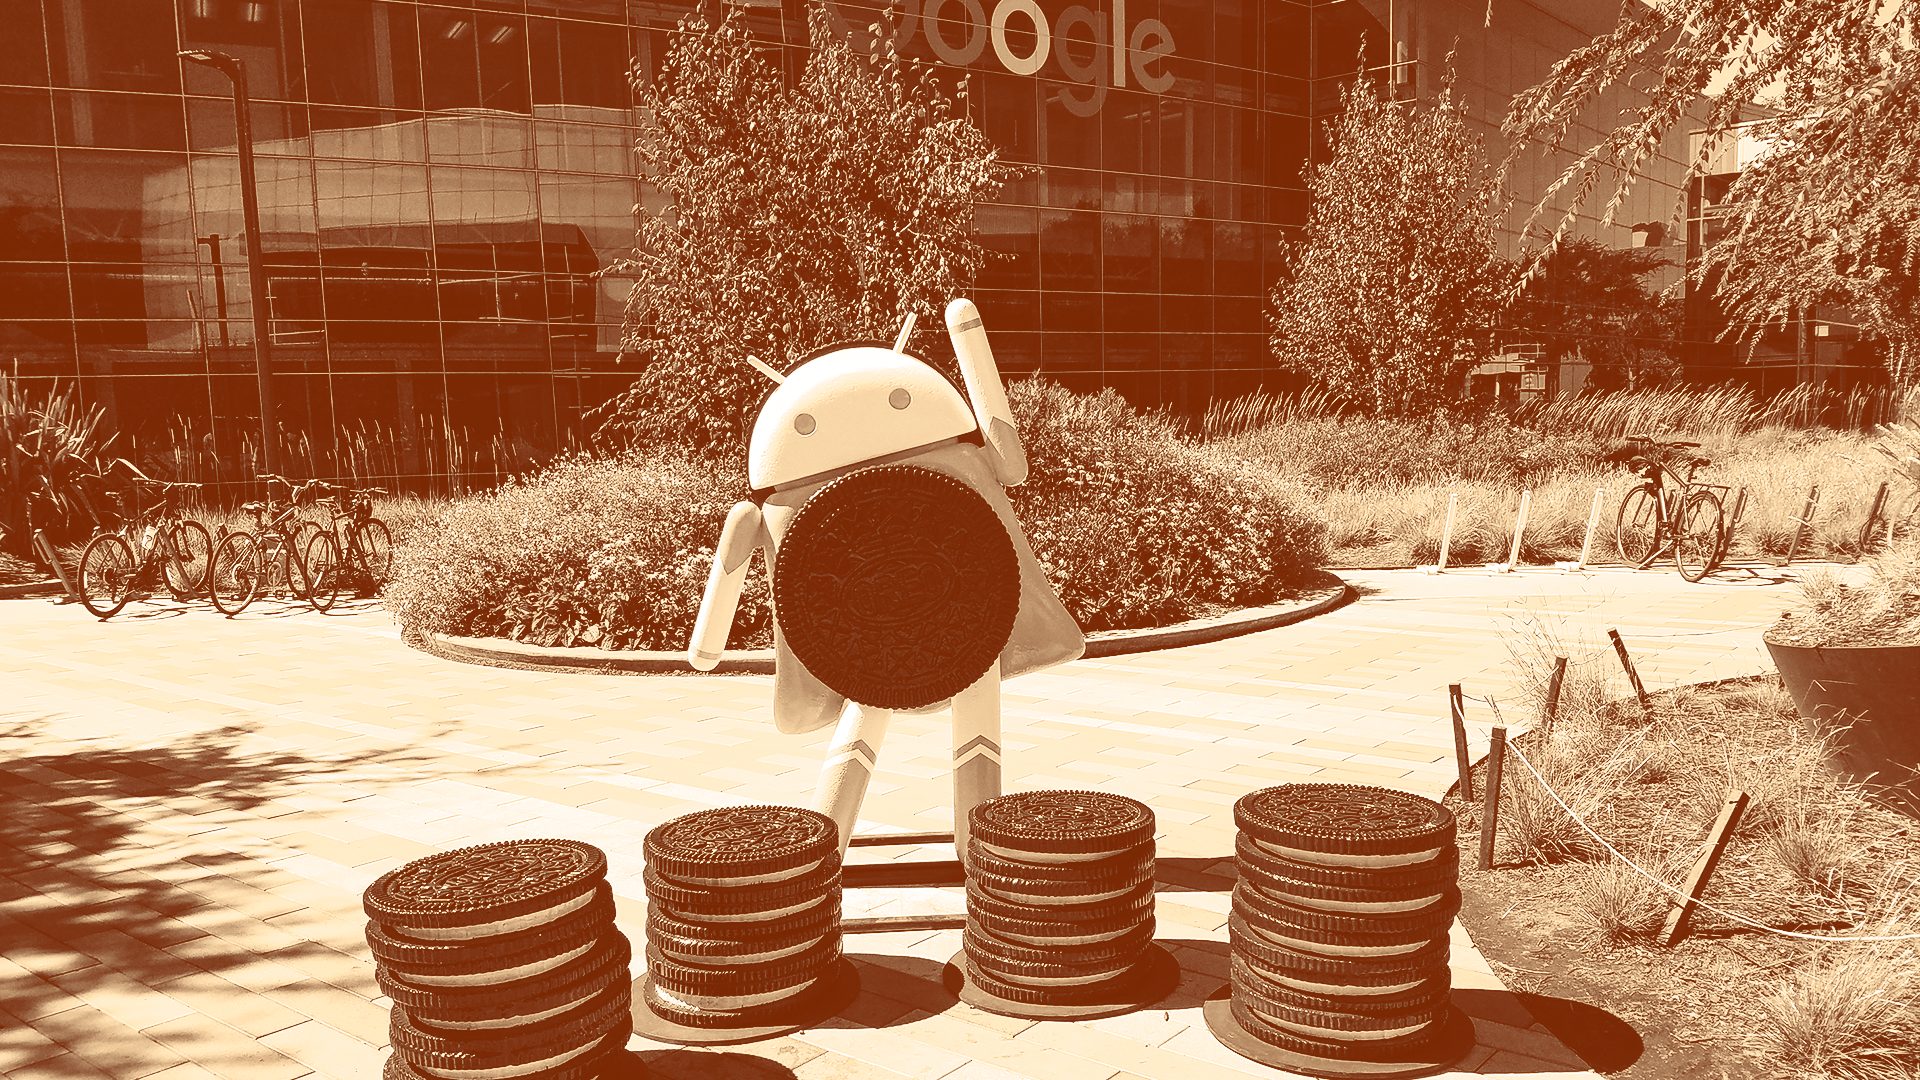 cookies outside Google headquarters